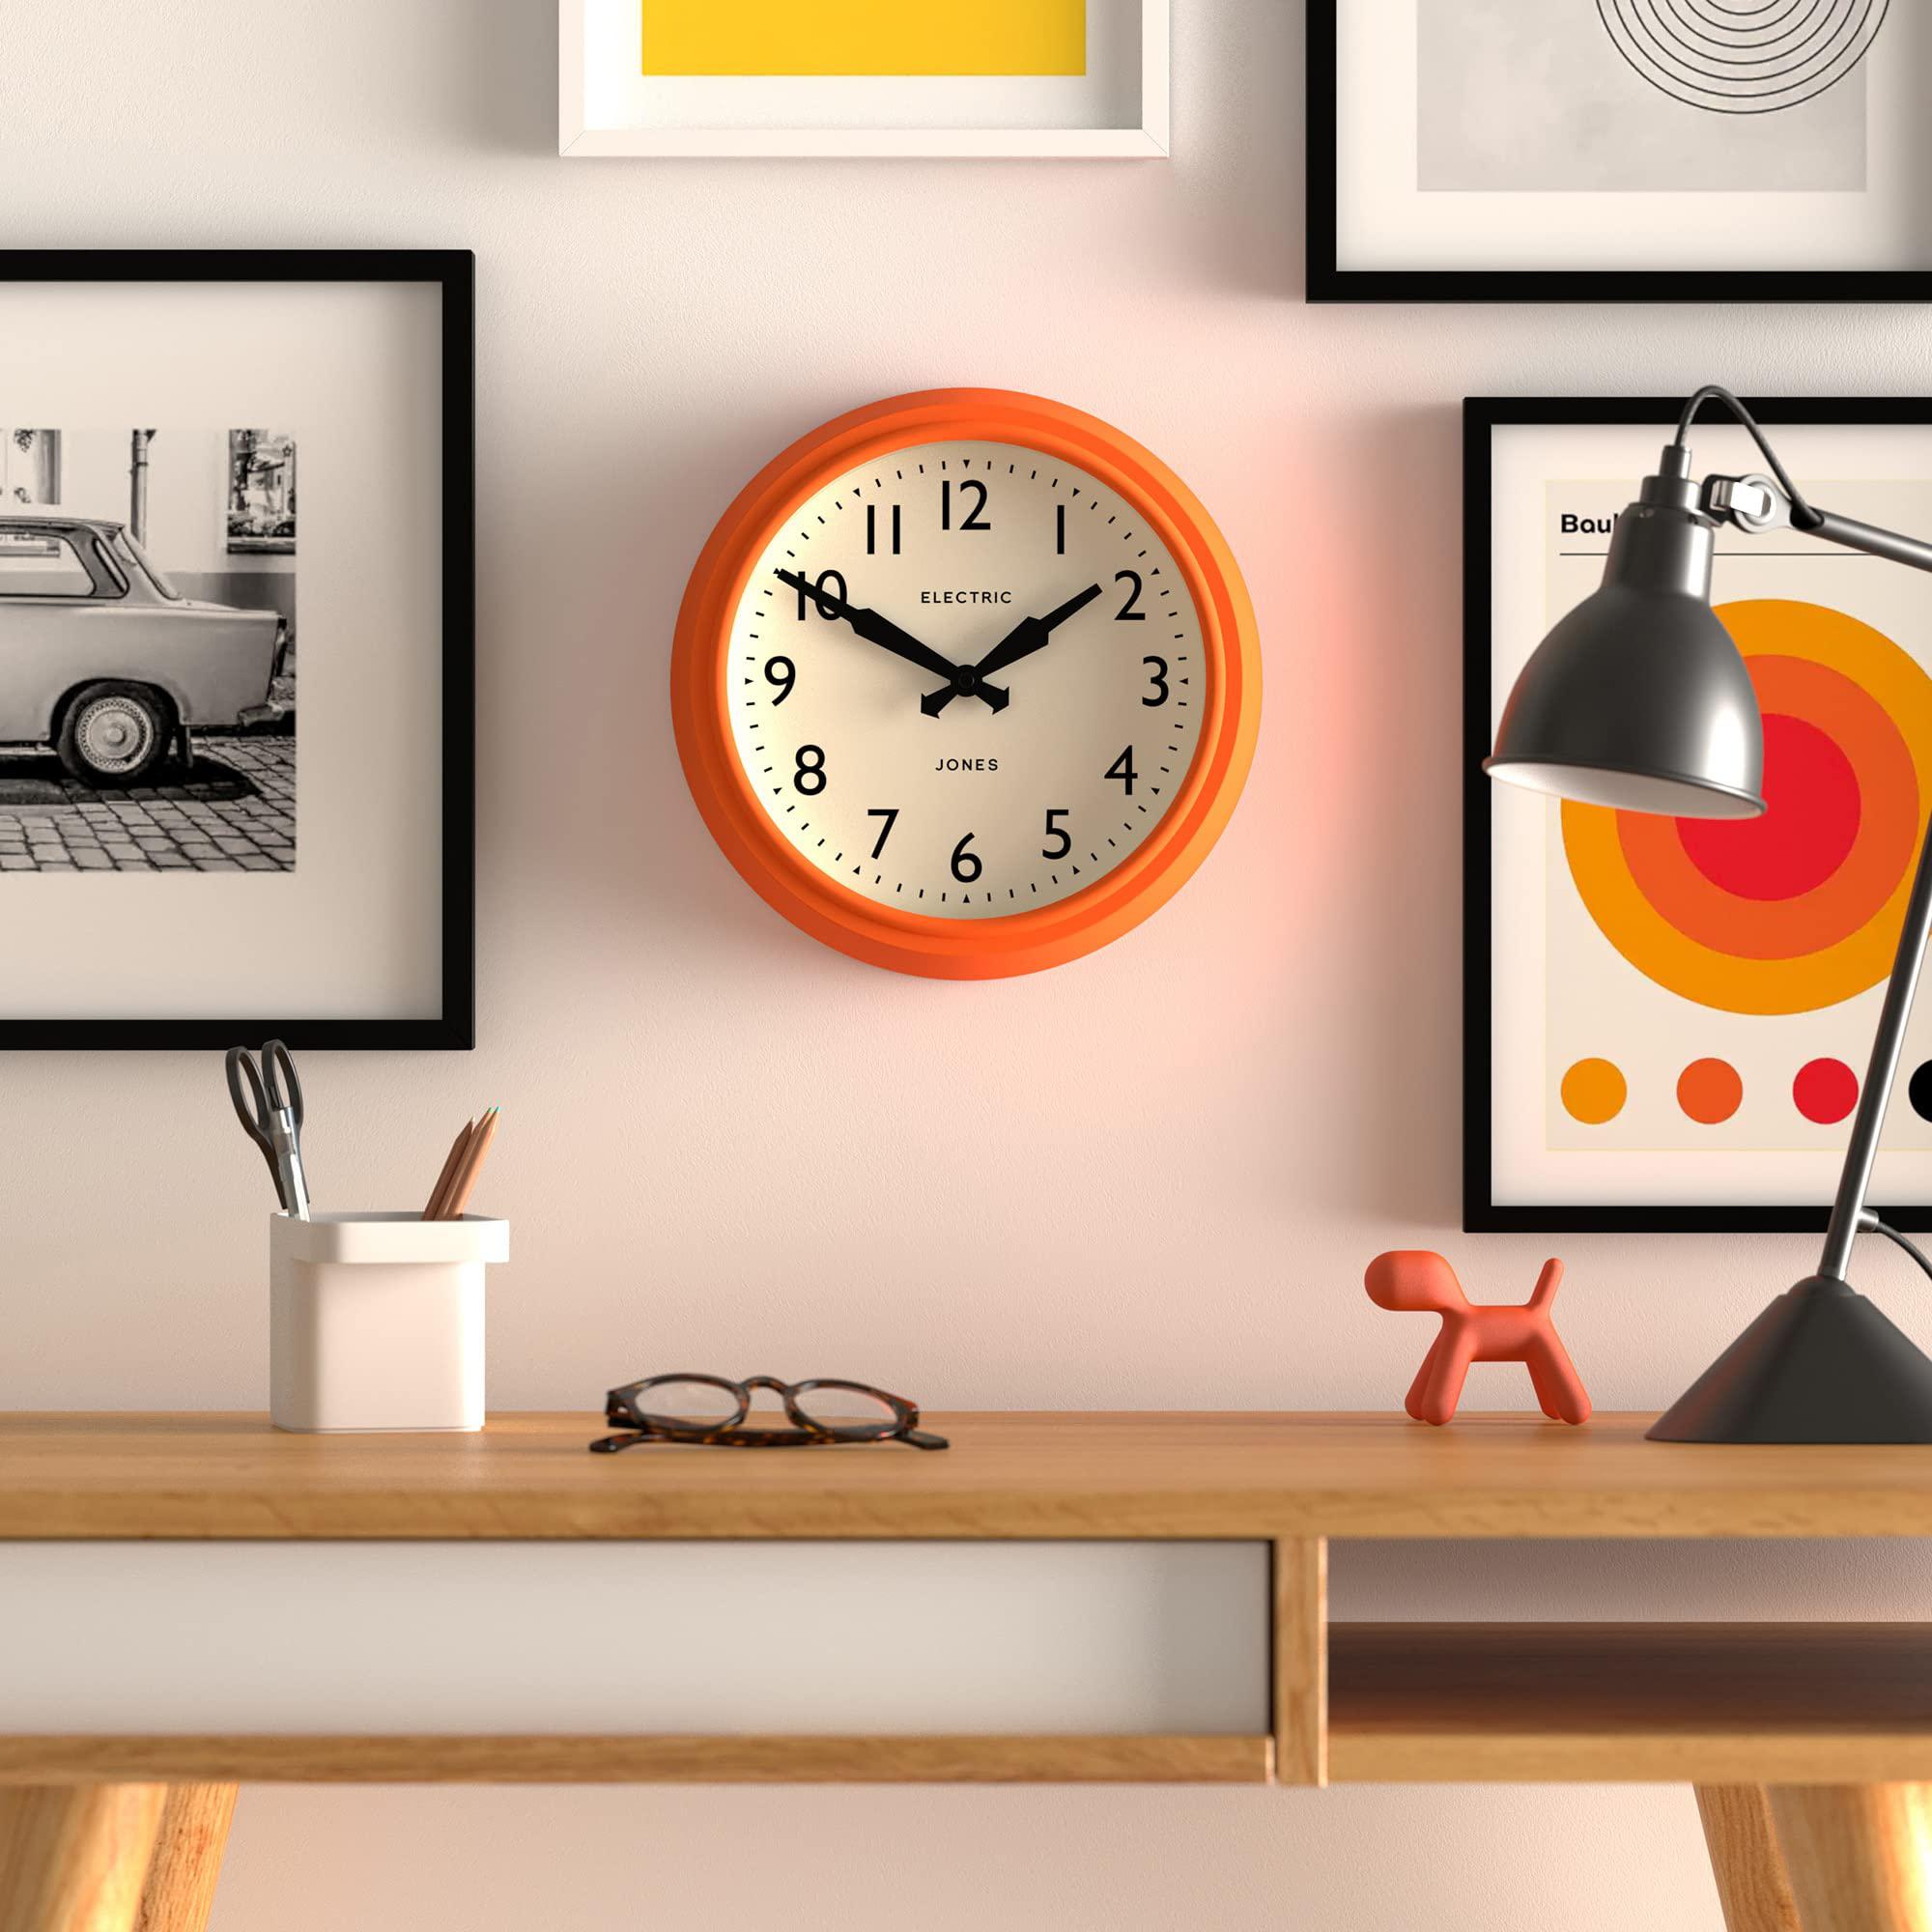 jones clocks telecom round wall clock - retro clock - designer clock - kitchen clock - living room clock - office clock - eas